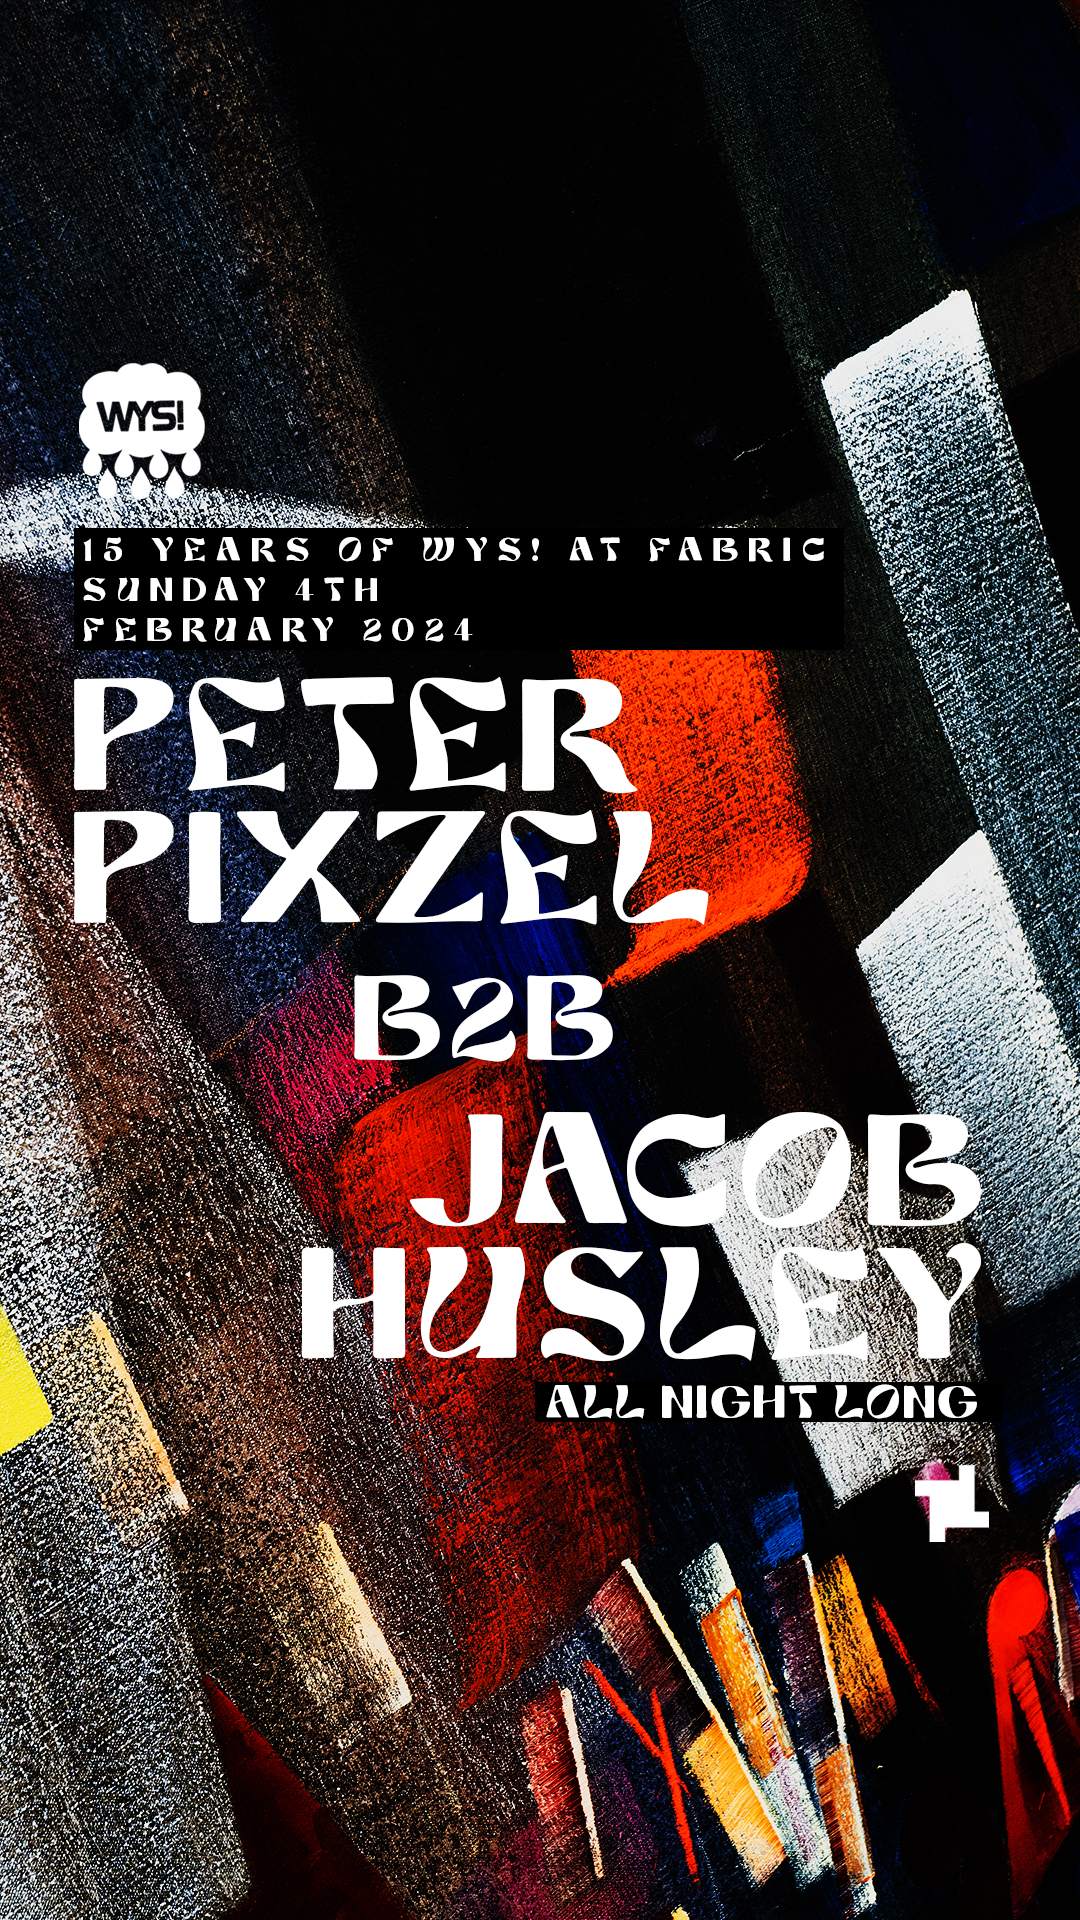 C.A.Y.A: WetYourSelf! 17th Birthday - Jacob Husley B2B Peter Pixzel (All Night Long) - Página frontal